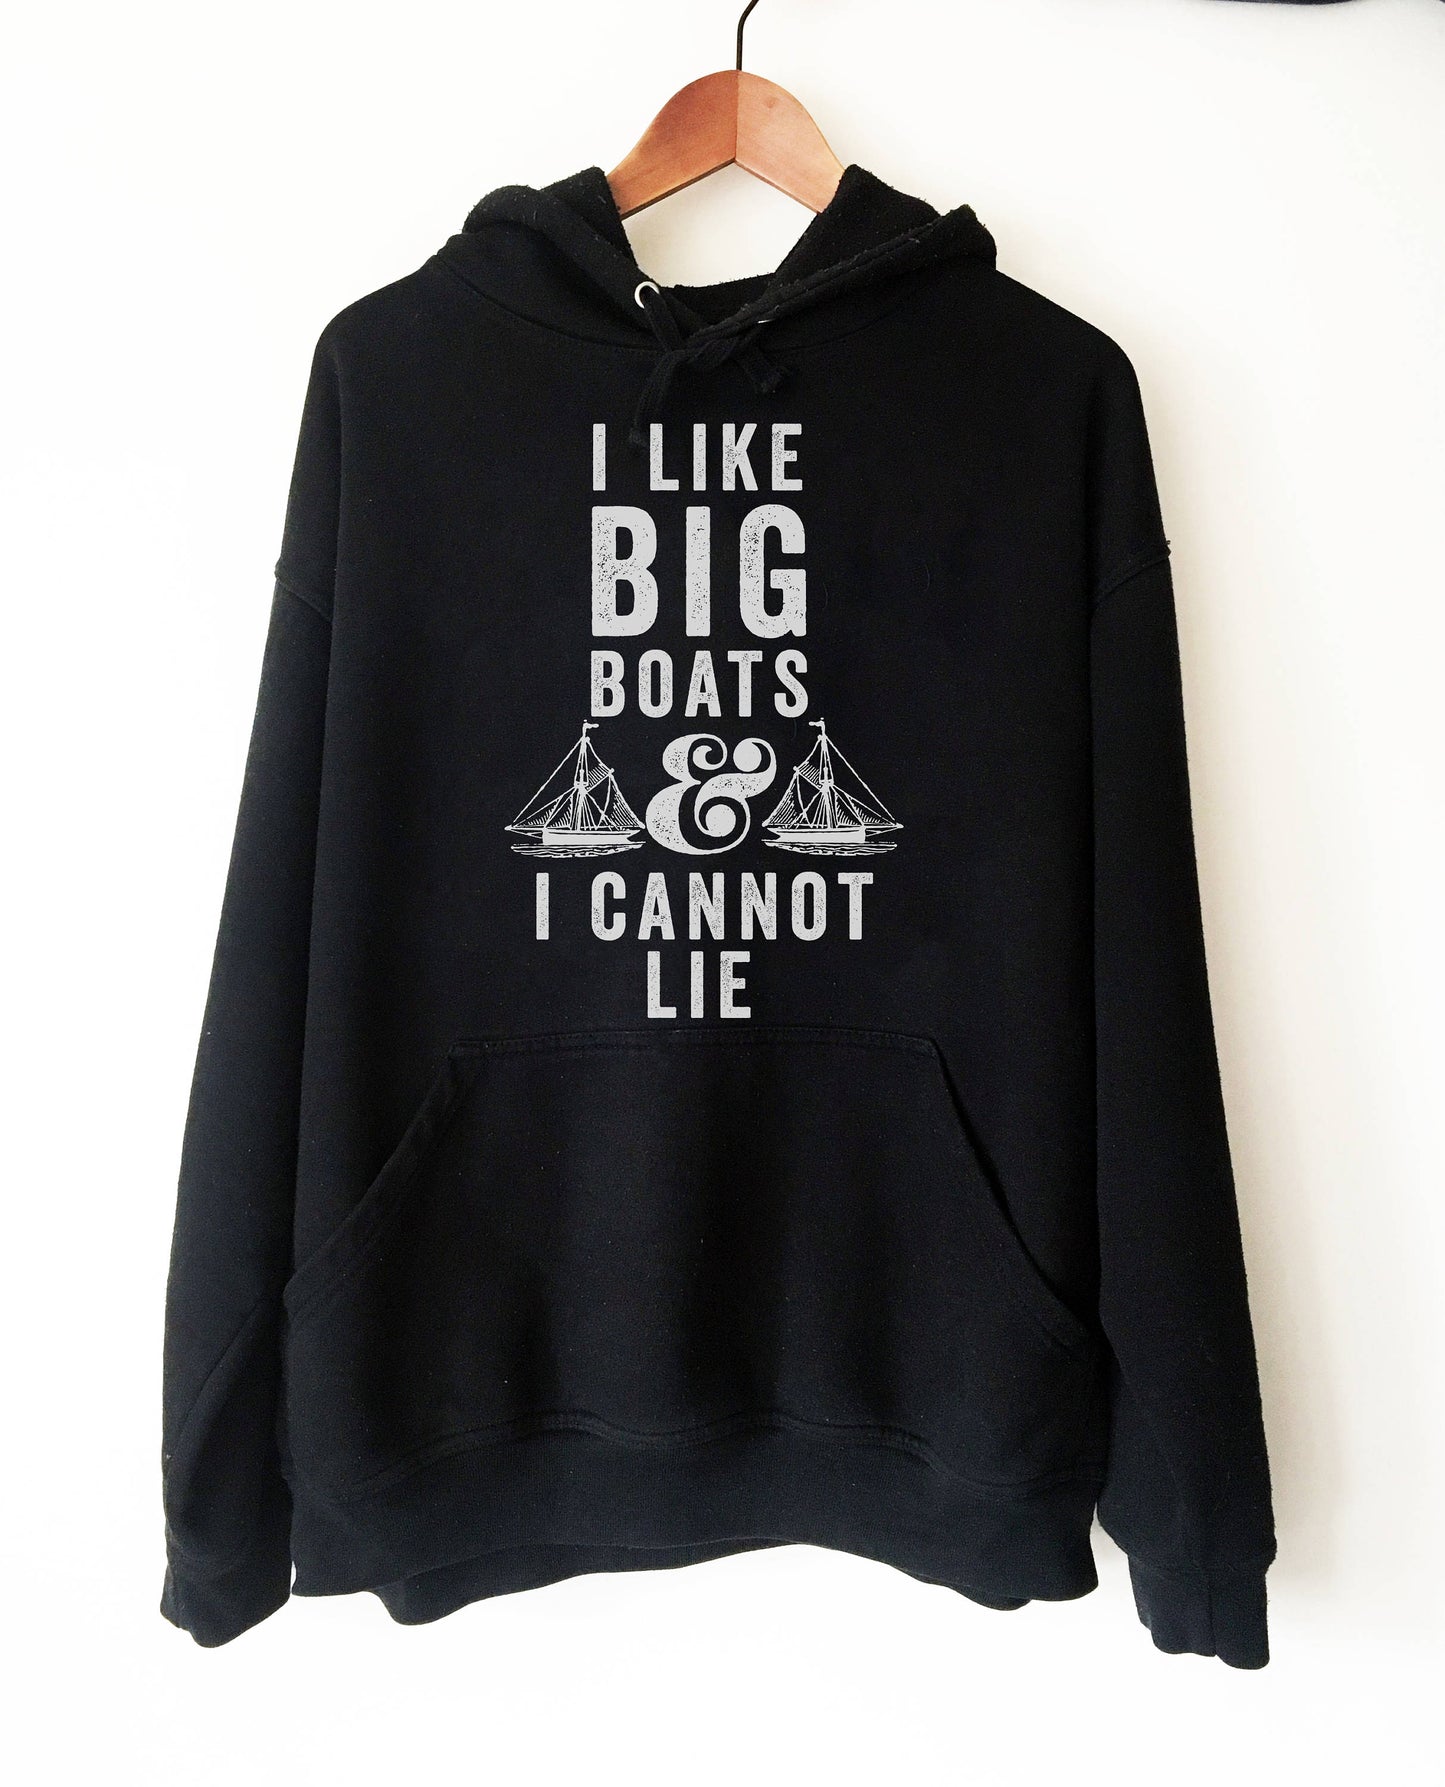 I Like Big Boats & I Cannot Lie Hoodie - Captain shirt, Sailor shirt, Nautical shirt, Sailing shirt, Sailor gift, Boat shirt, Sailor Hoodie